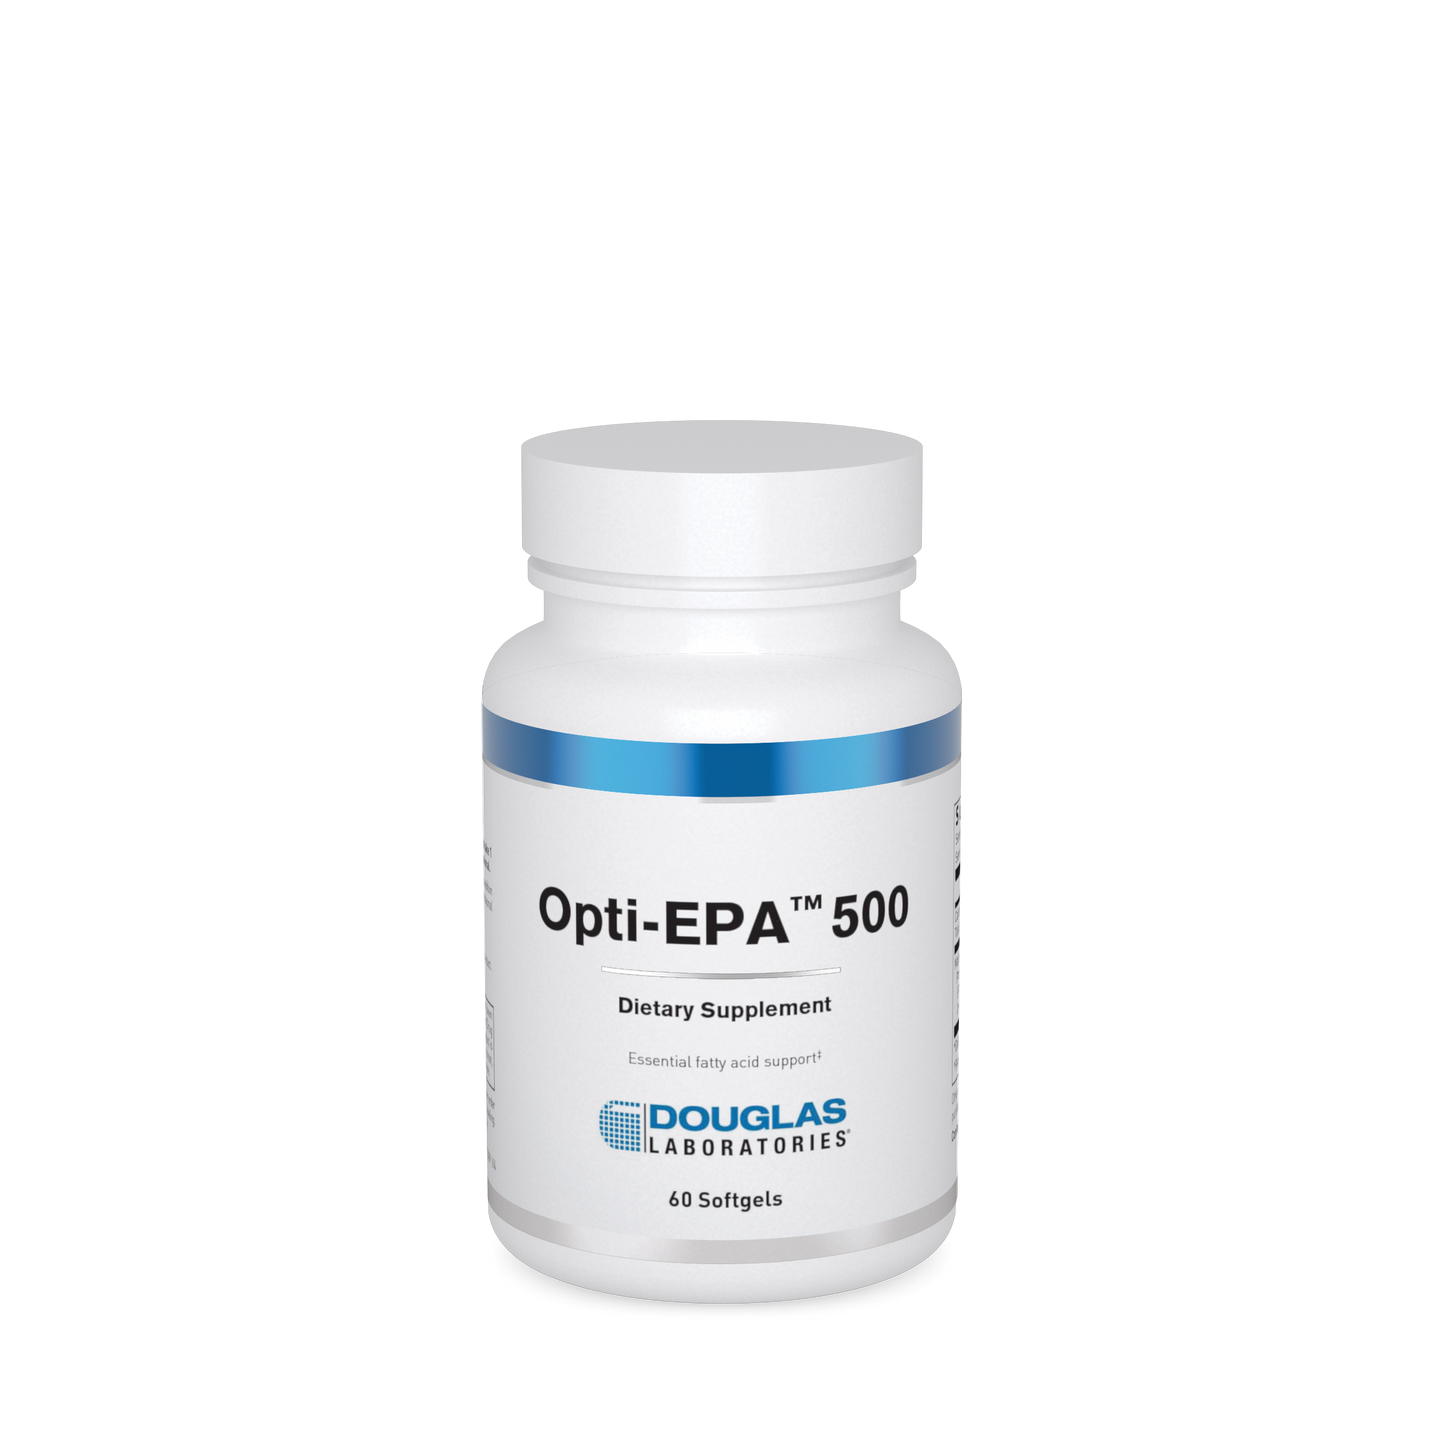 OPTI-EPA™ 500